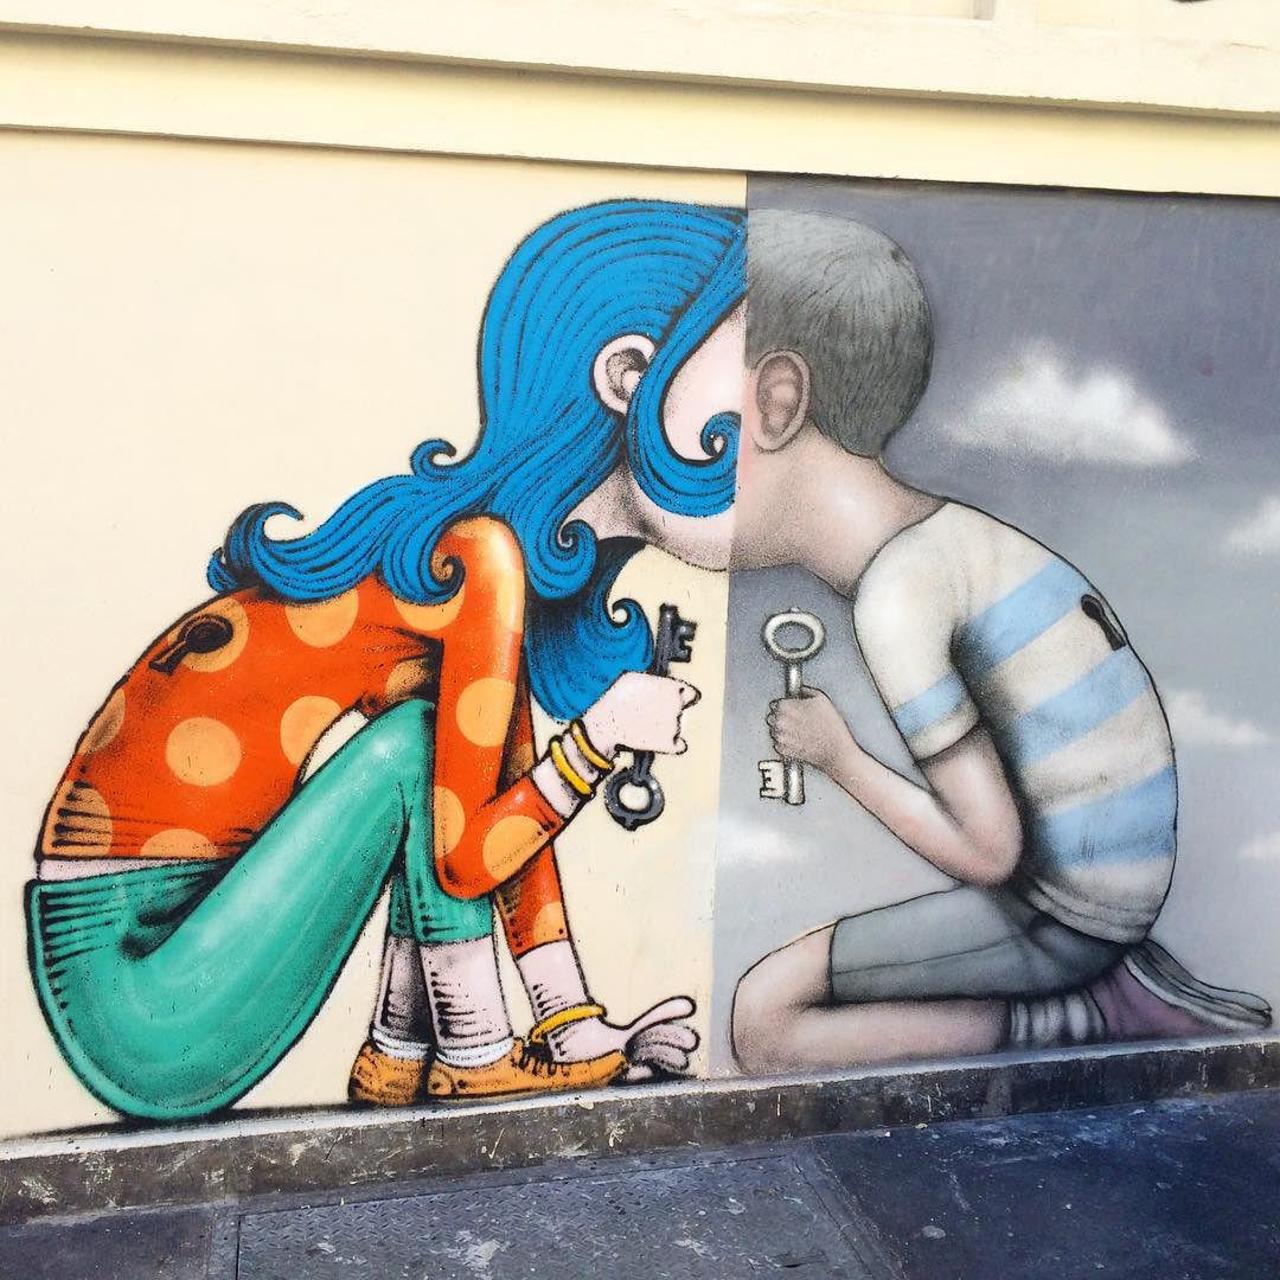 #Paris #graffiti photo by @benapix http://ift.tt/1LjpqmA #StreetArt http://t.co/zcdoESy8eD